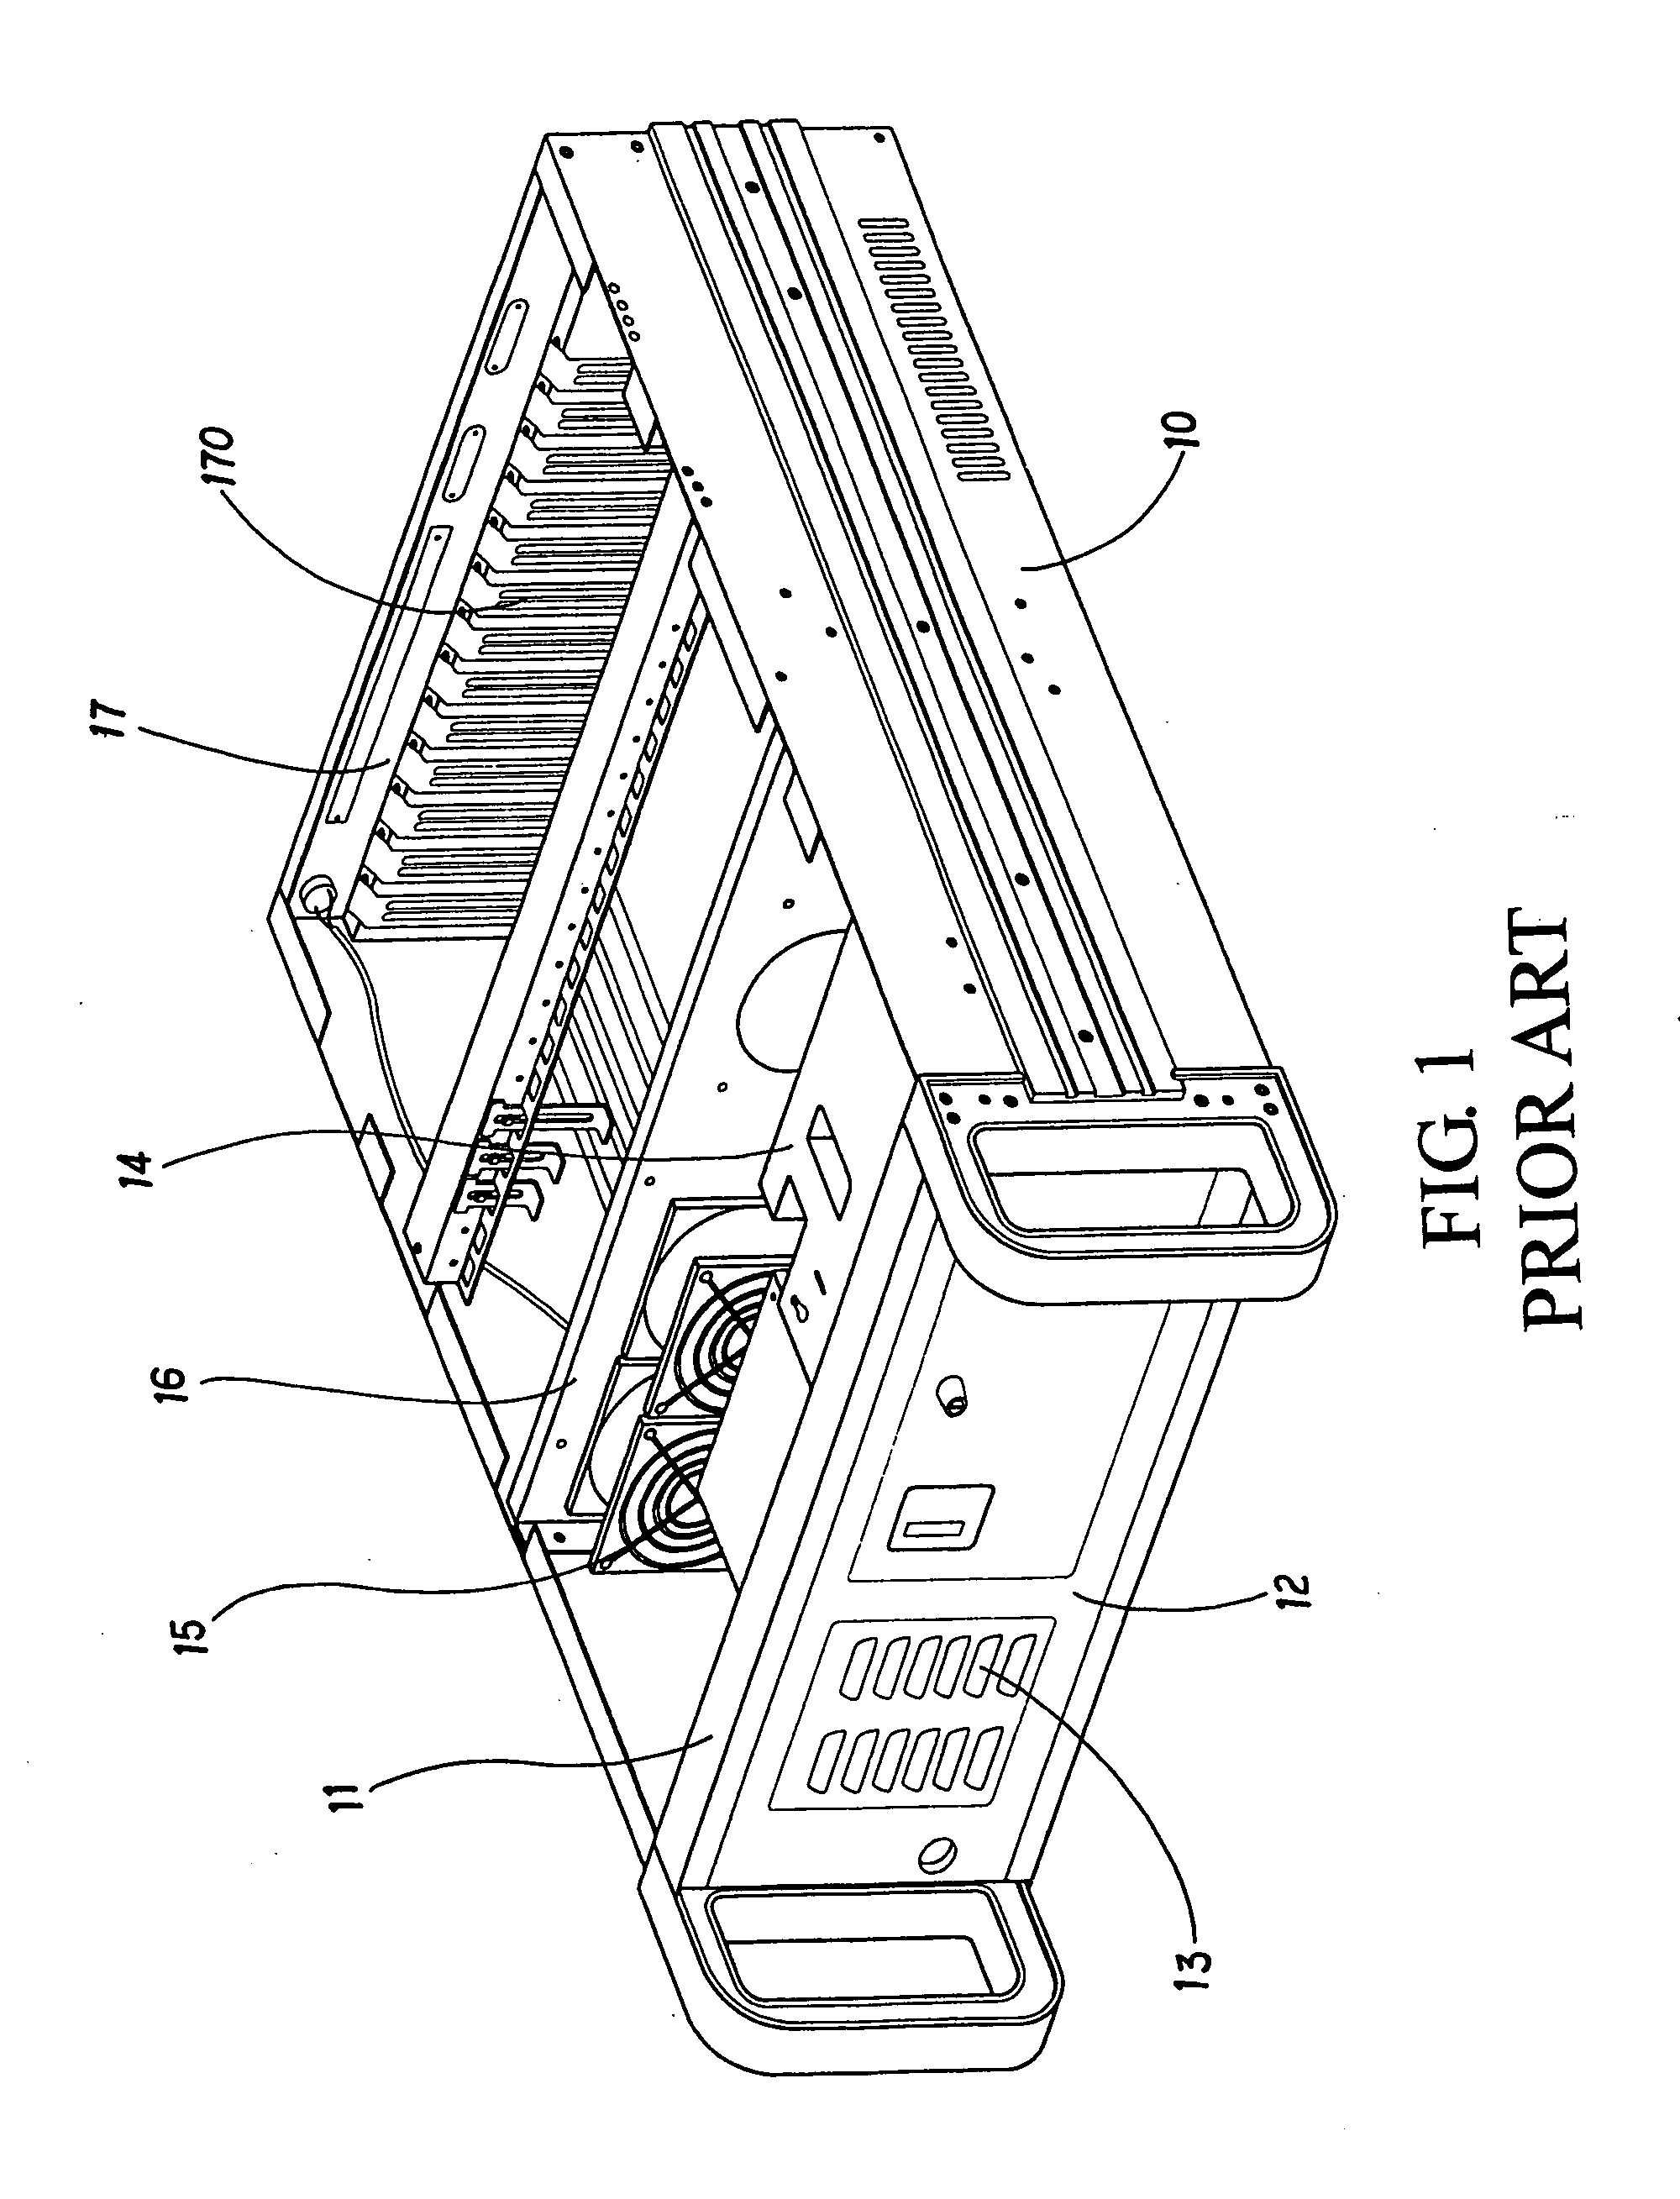 Industrial computer casing